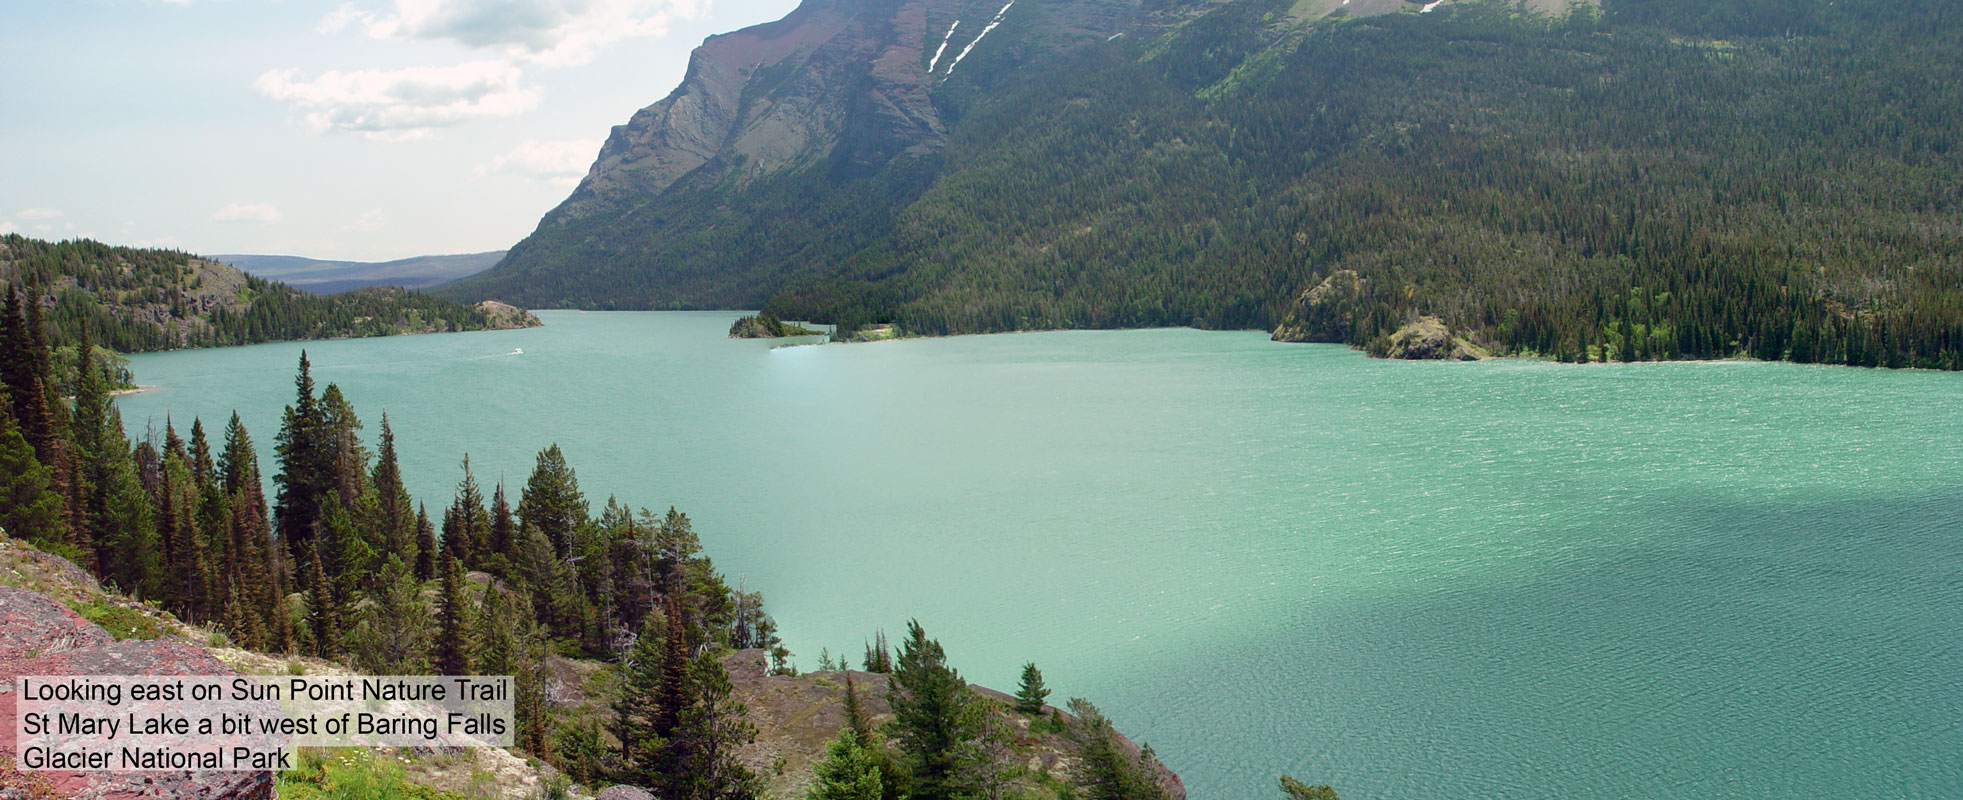 St Mary Lake Glacier National Park